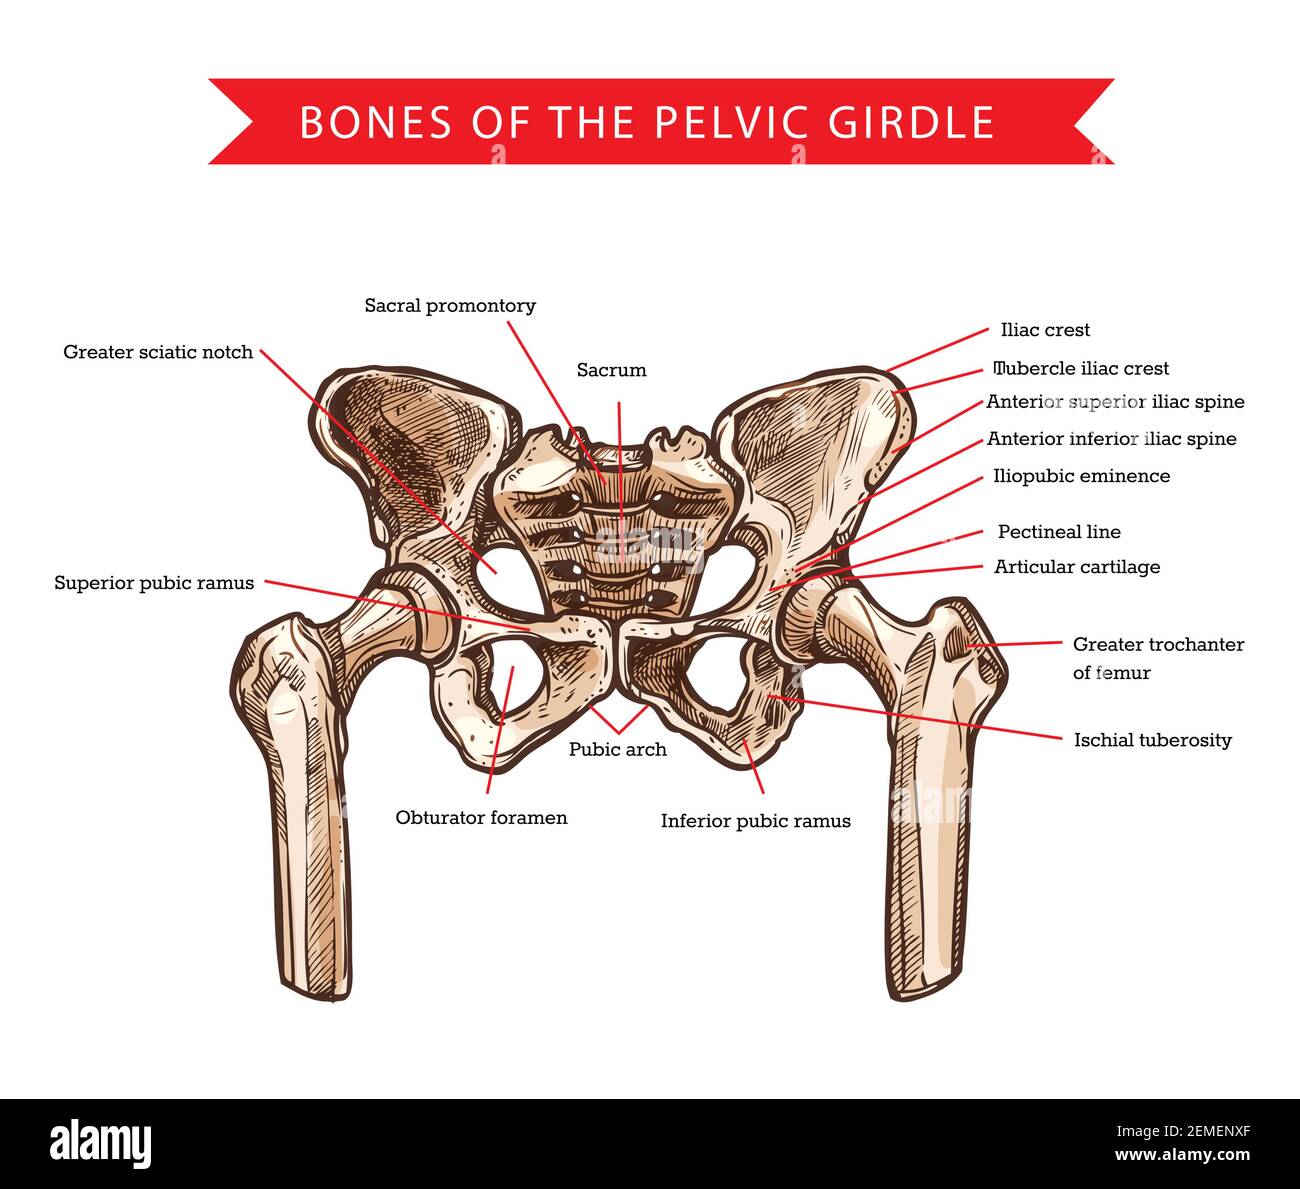 Pelvis bones of pelvic girdle, vector sketch of human anatomy and